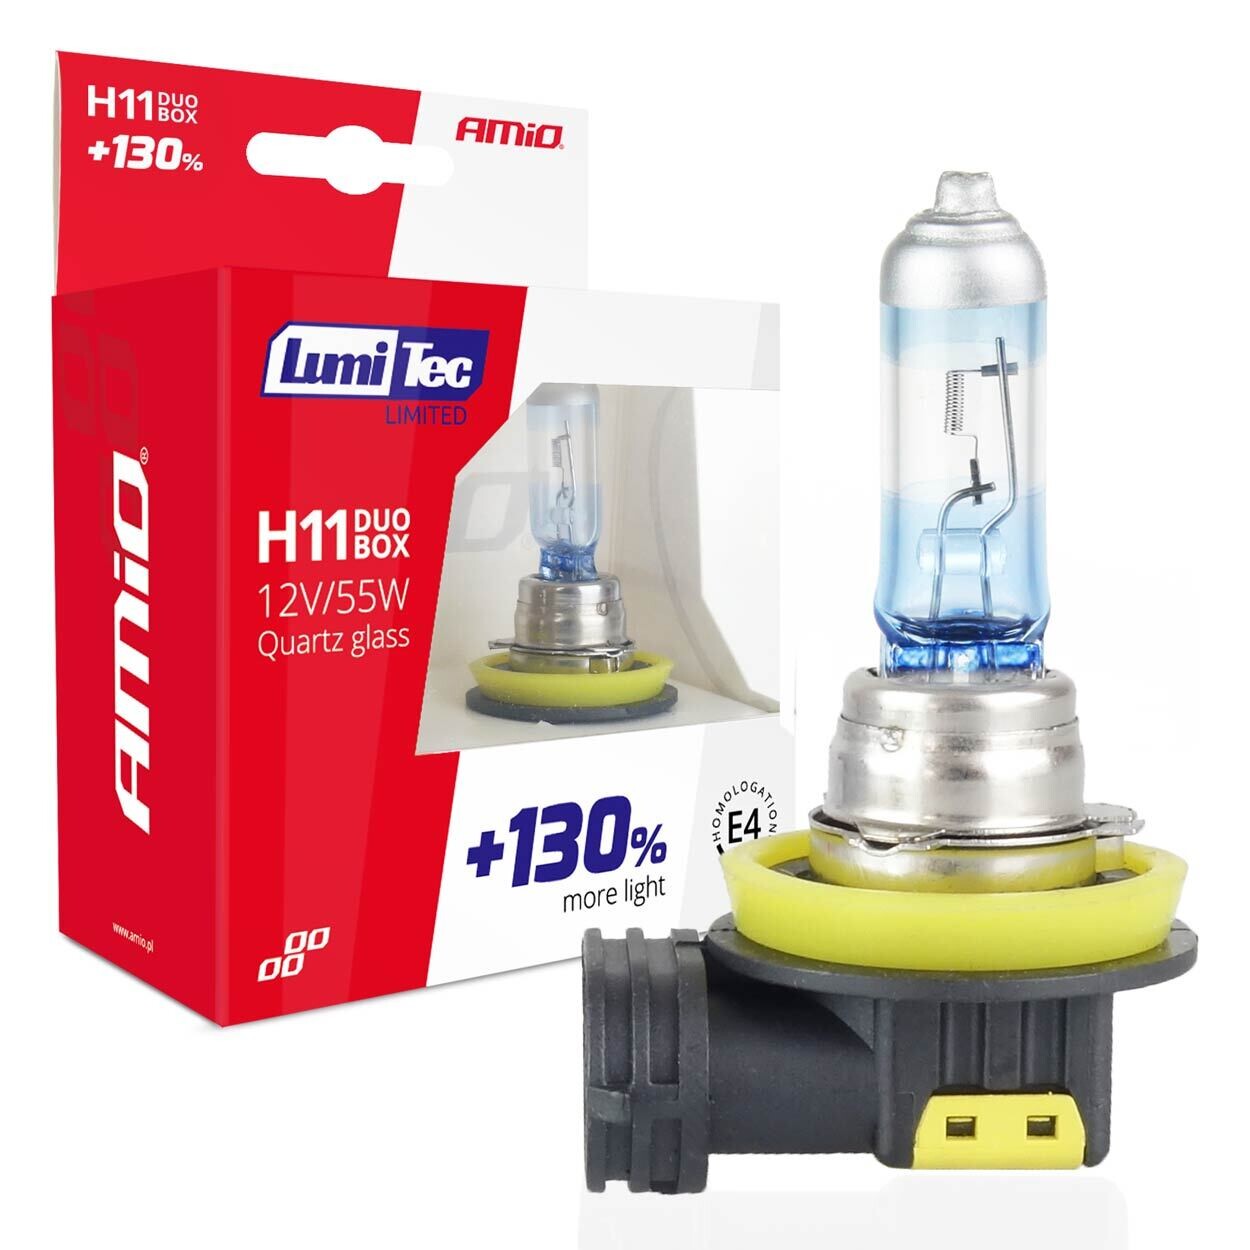 Halogen bulbs H11 12V 55W LumiTec LIMITED +130% DUO